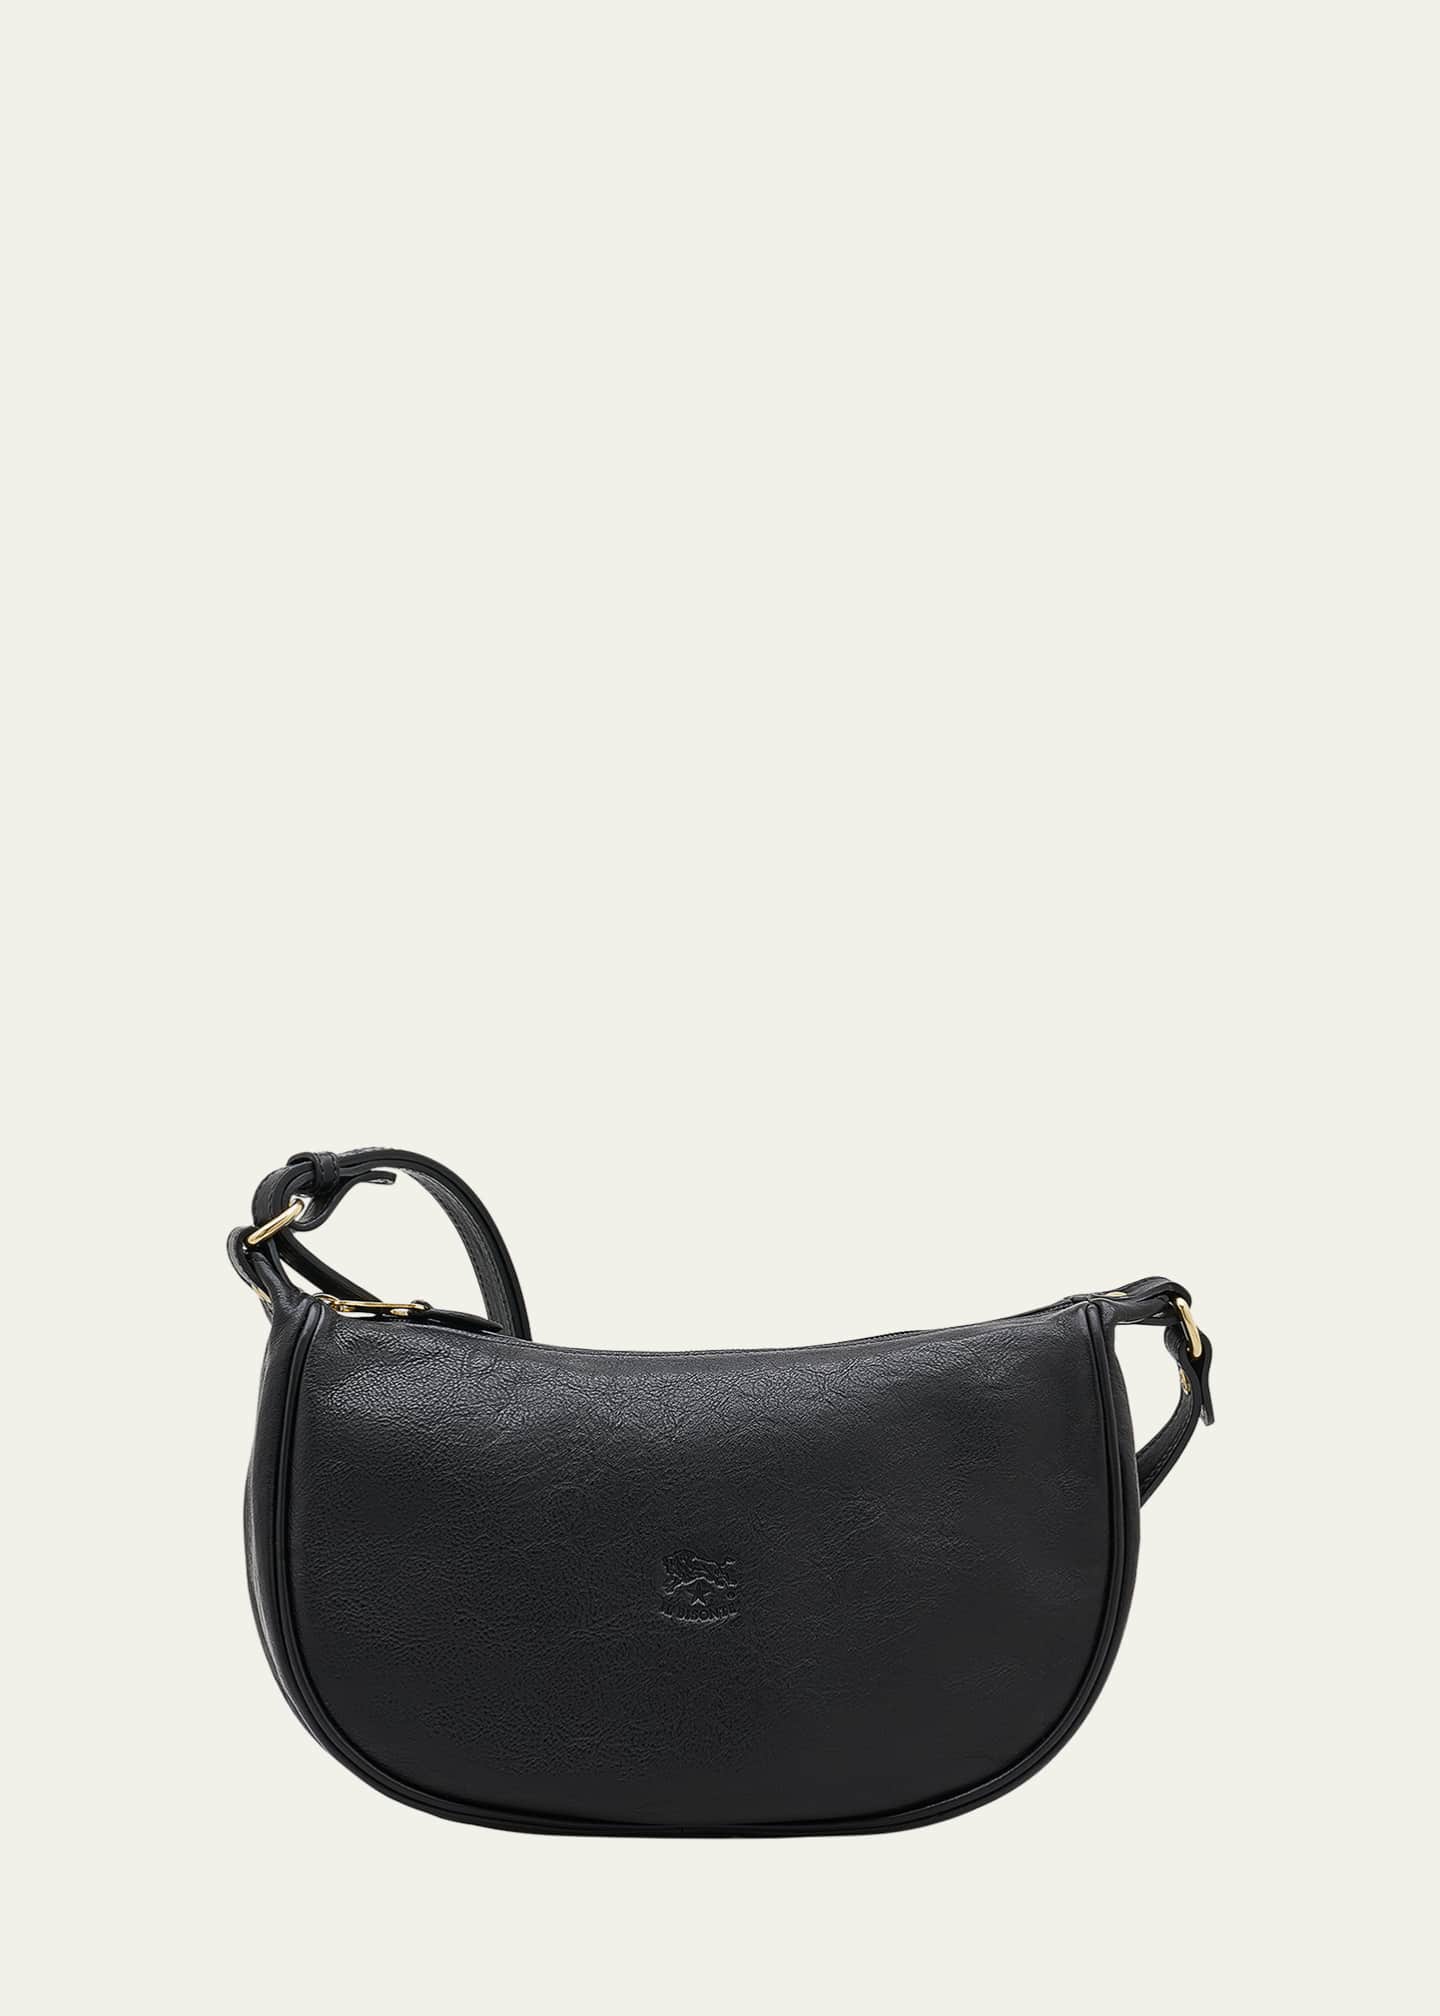 Authentic Longchamp Shop It Medium black Leather shoulder bag *FREE  SHIPPING*